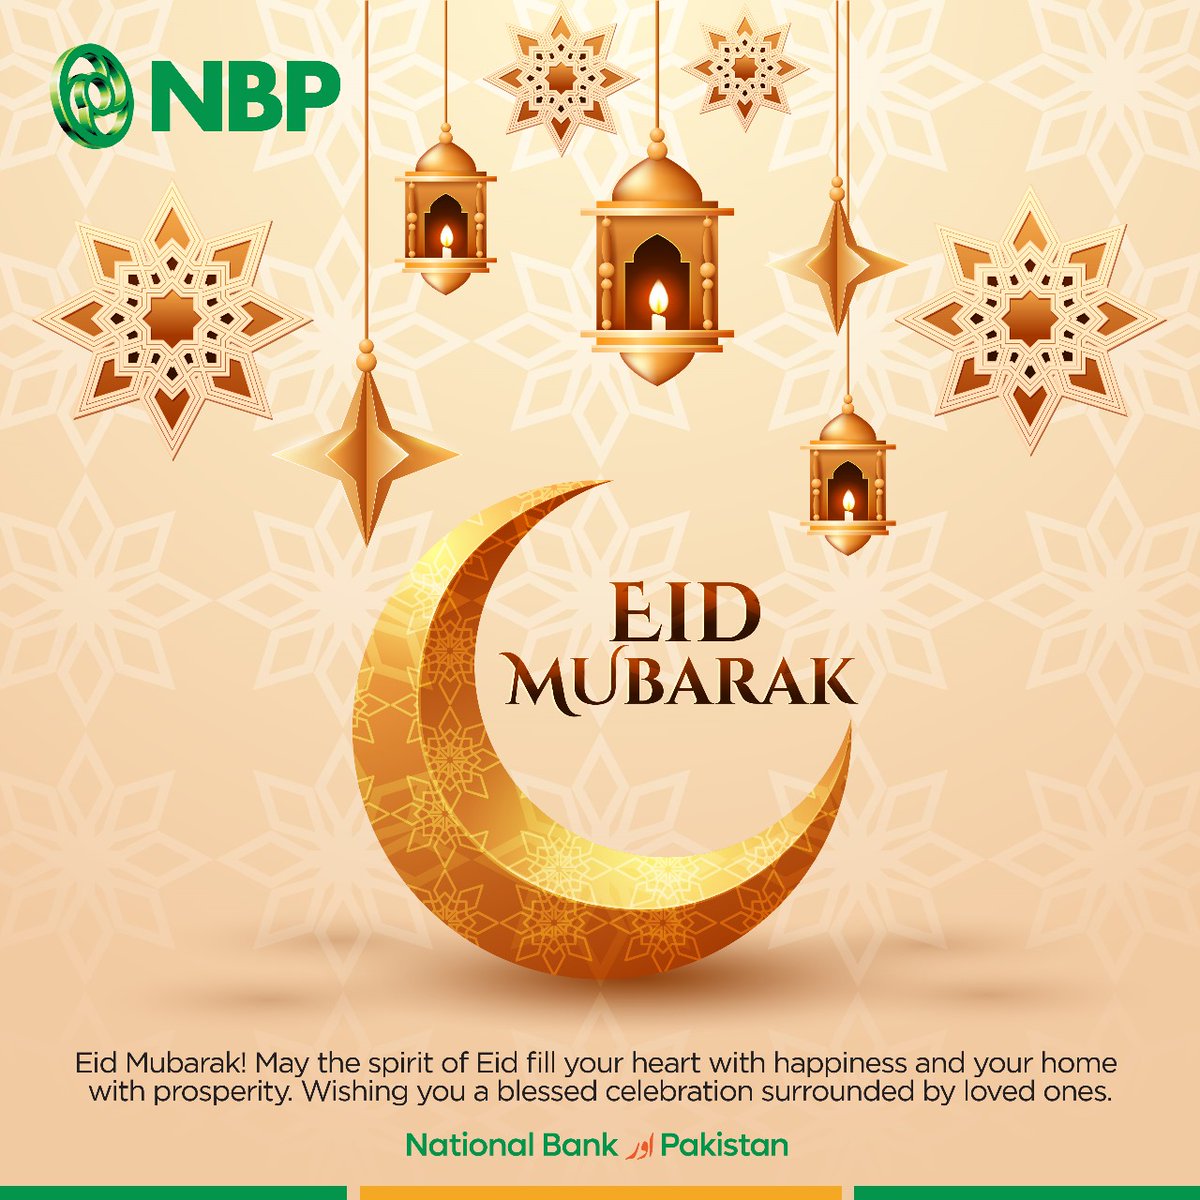 Eid Mubarak from NBP! Wishing you joy, blessings, and prosperity on this special occasion. #NBP #NationalBankofPakistan #EidMubarak2024 #NationsBank